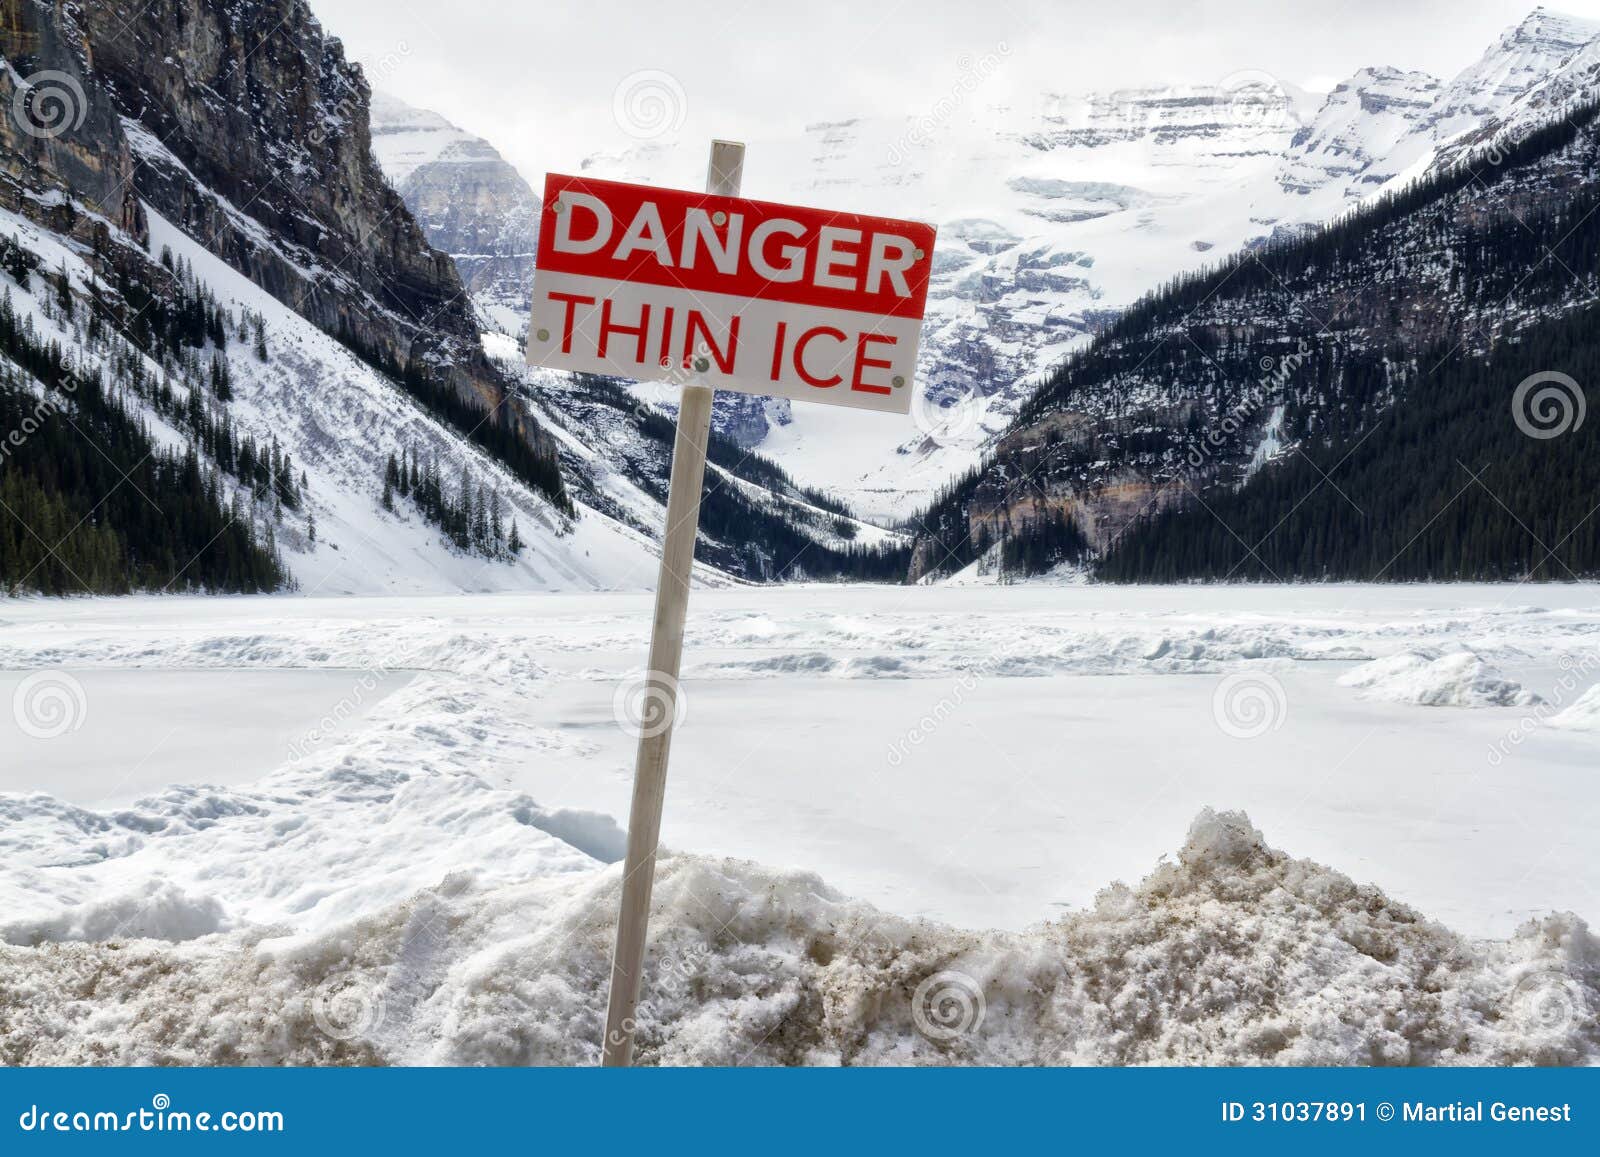 danger thin ice sign